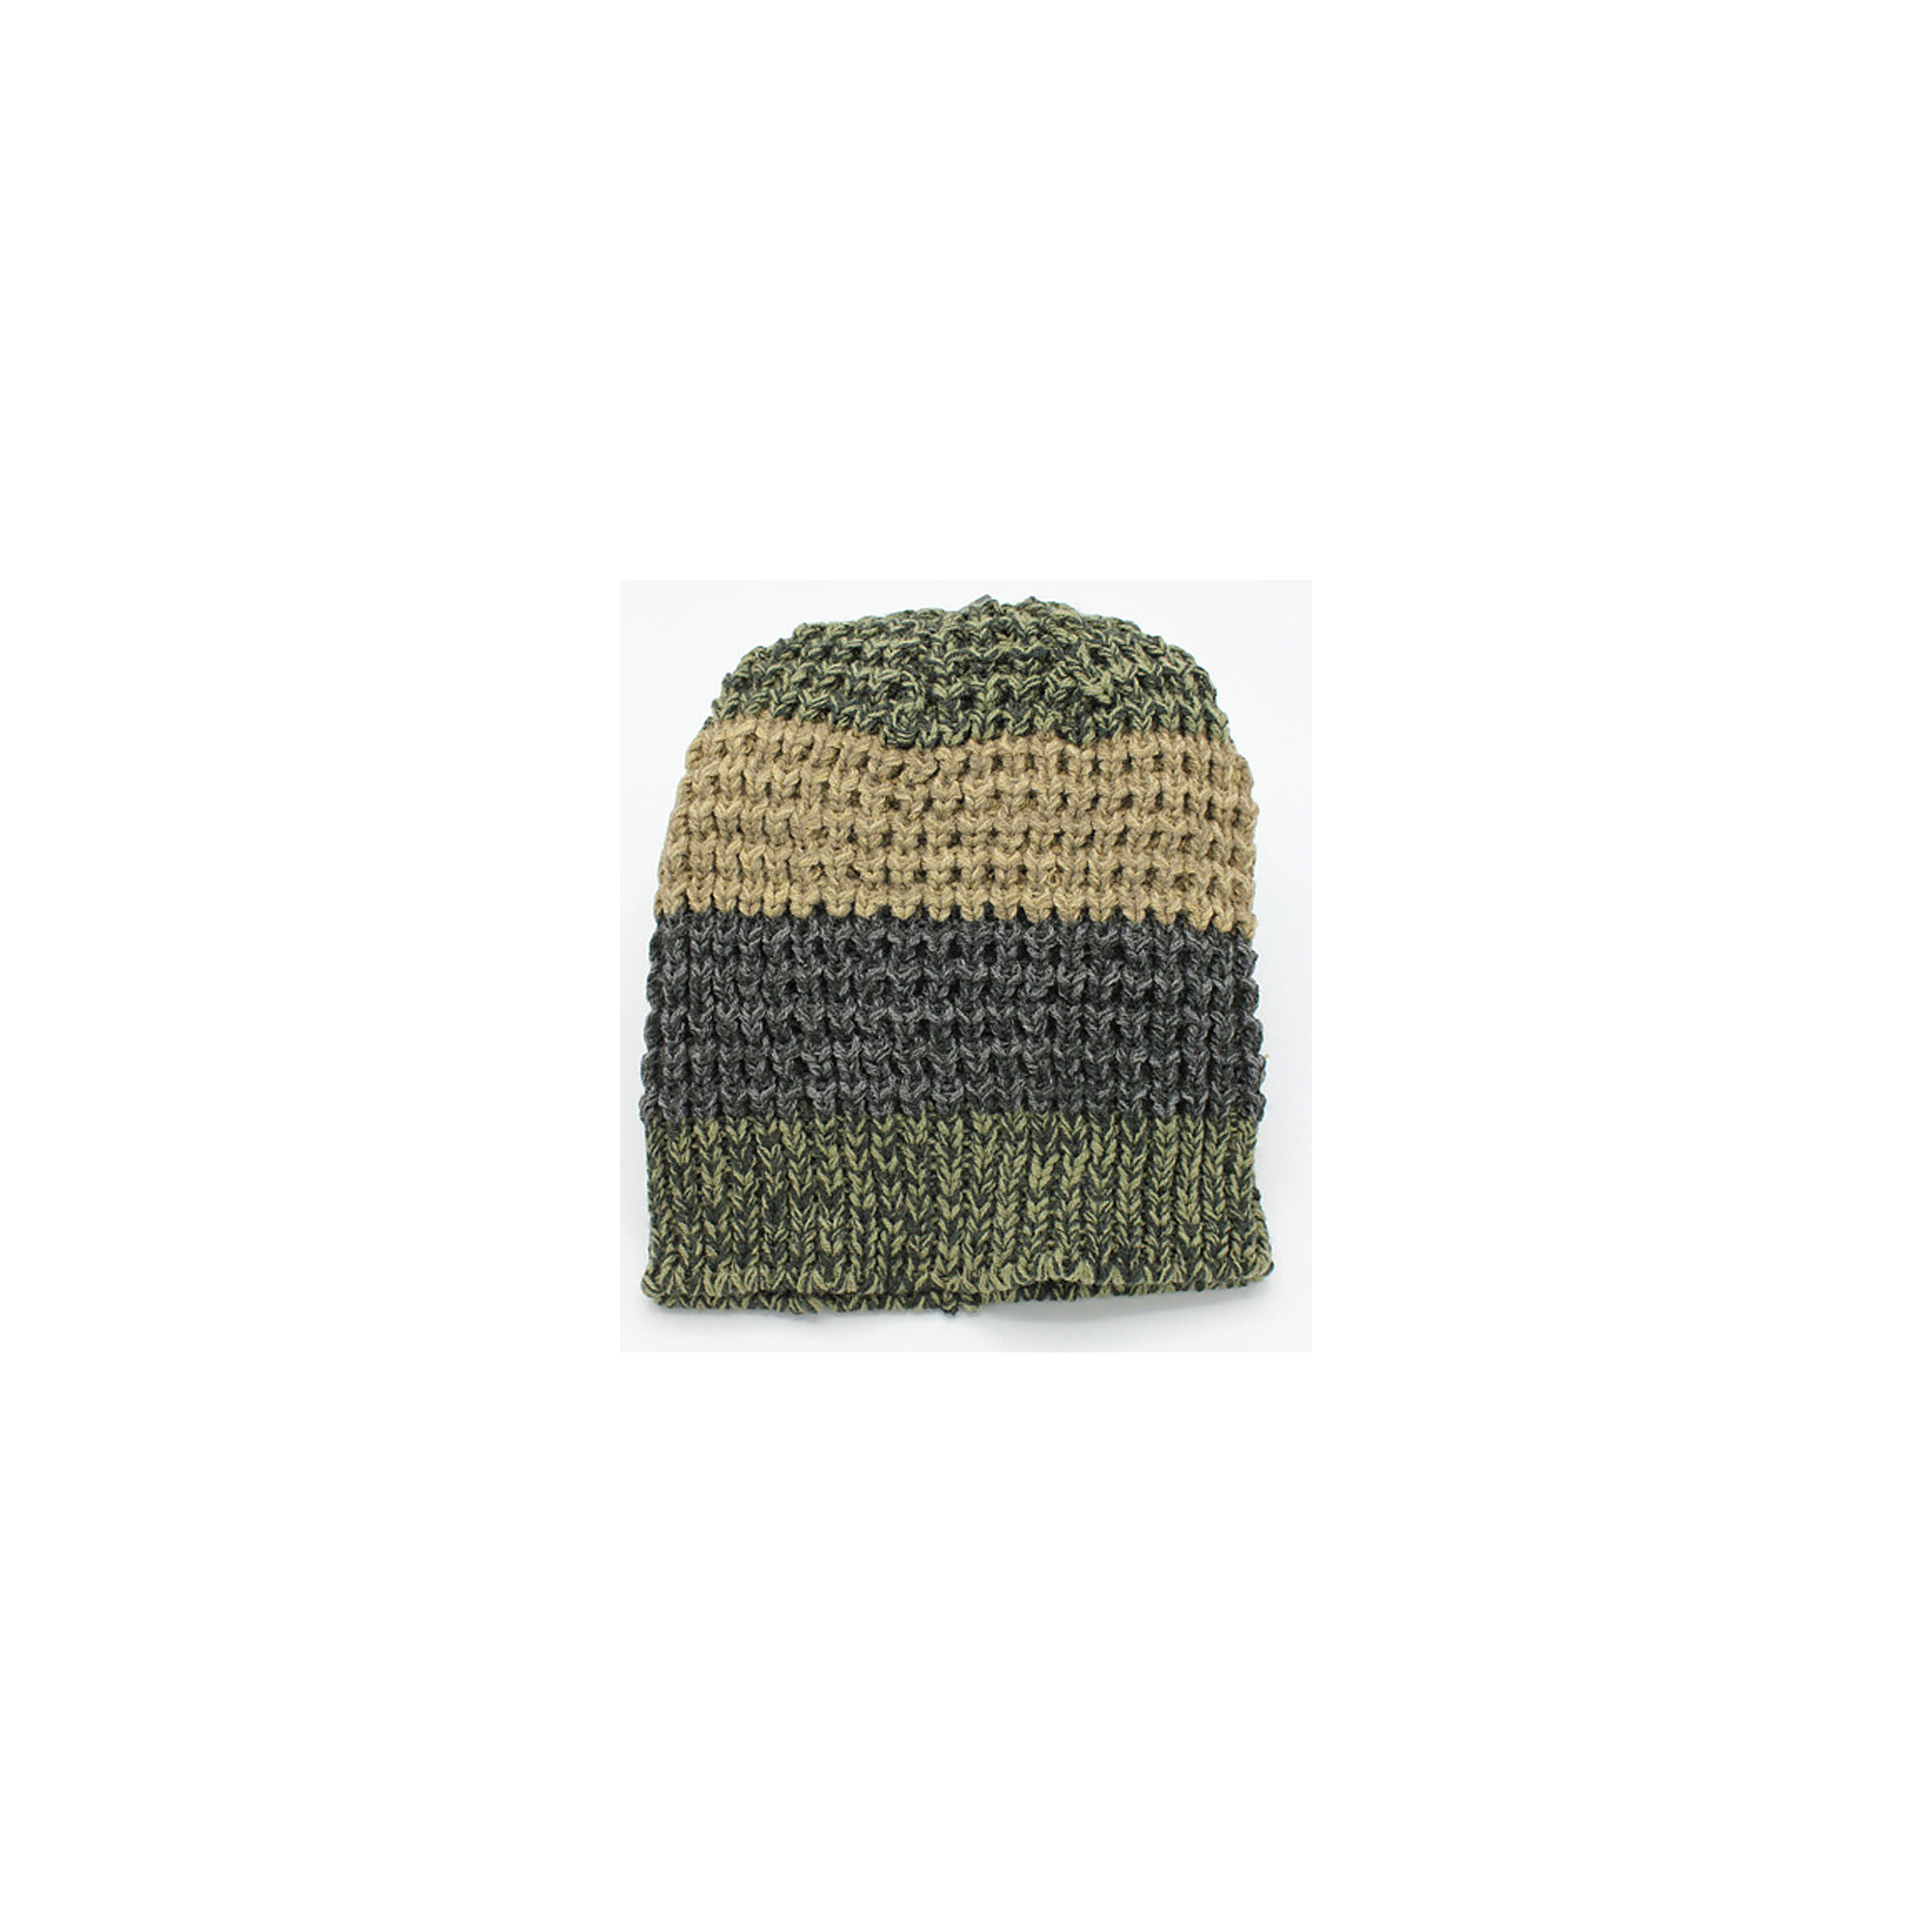 Green adult winter hat